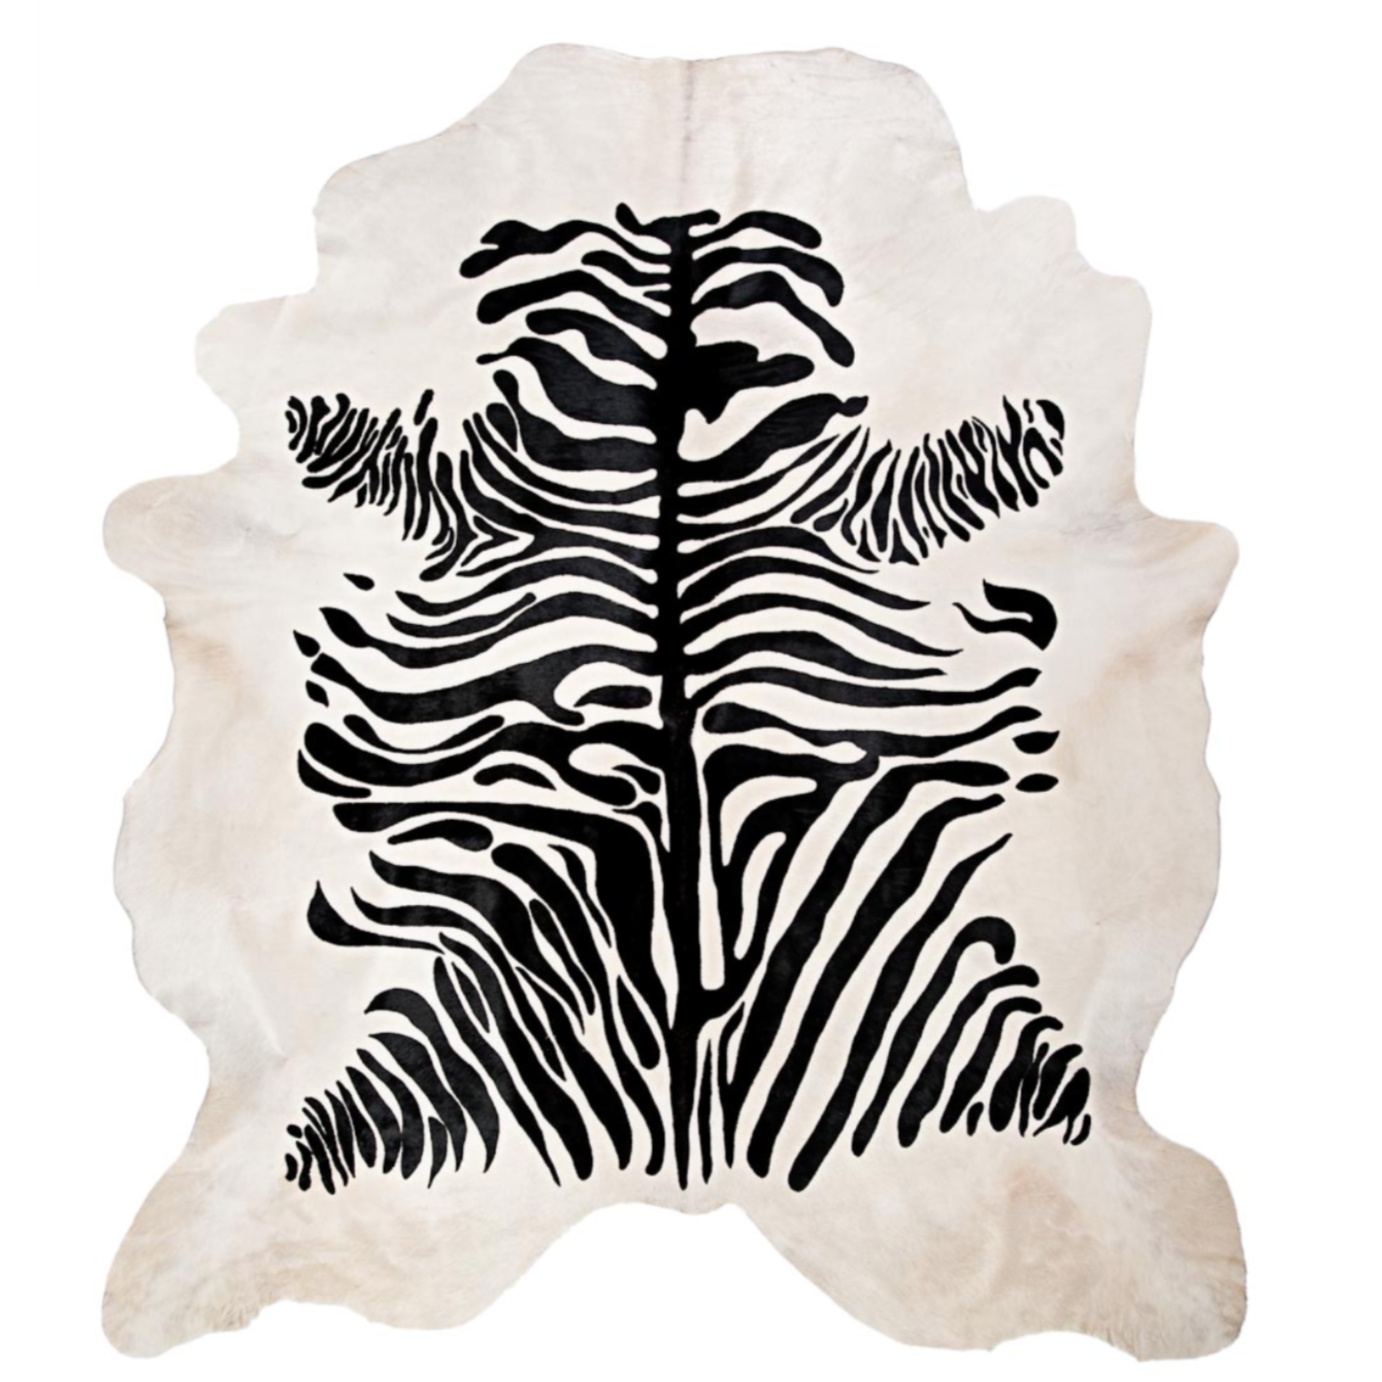 Italian Zebrone Printed Cowhide Rug, Black Stripes White Hide